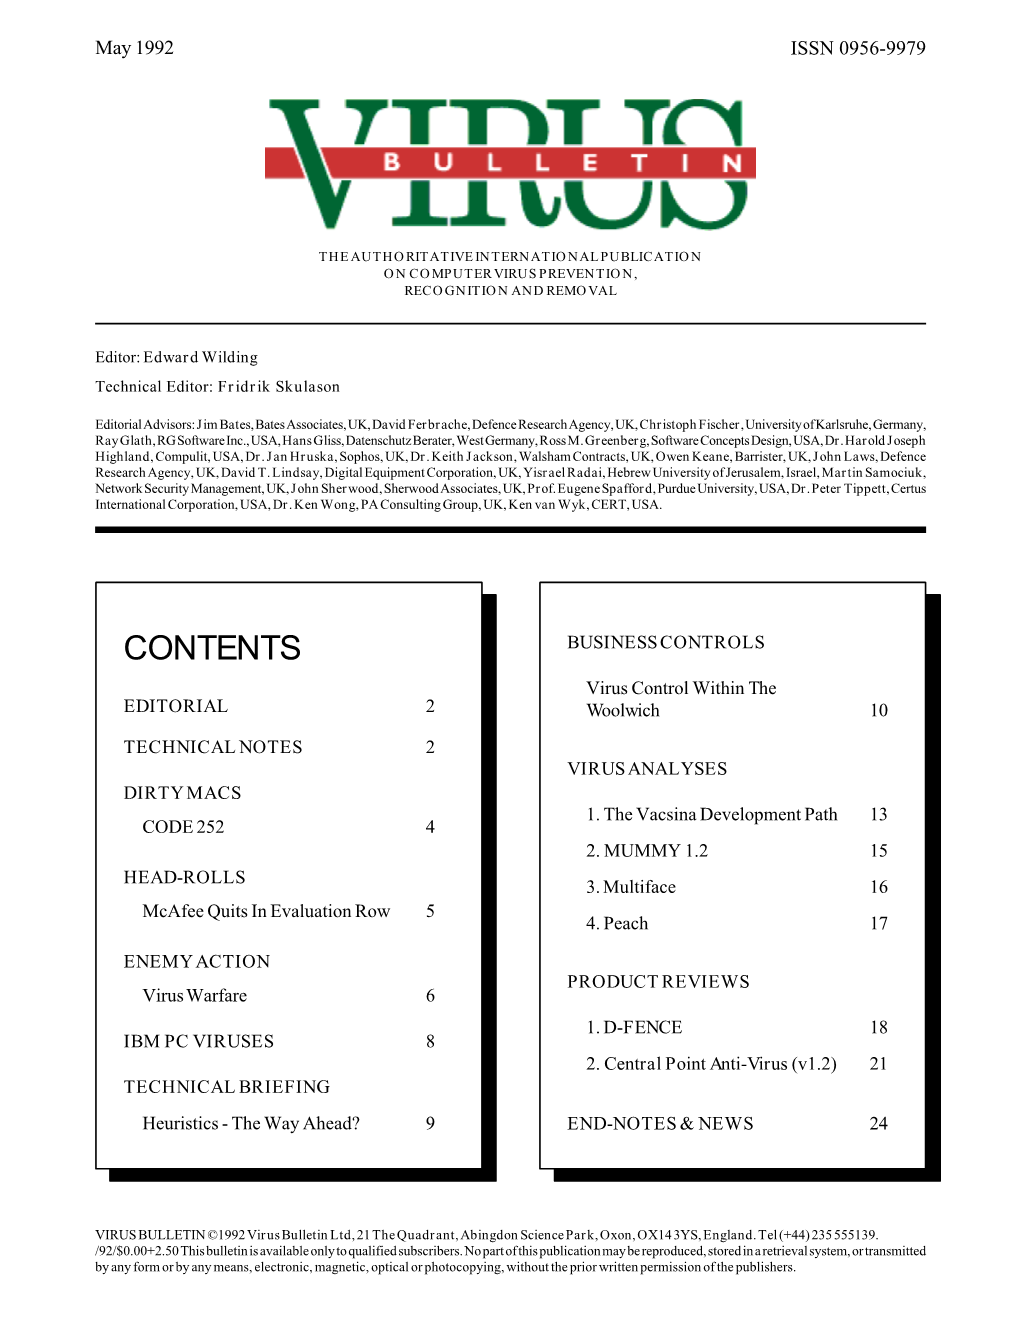 Virus Bulletin, May 1992